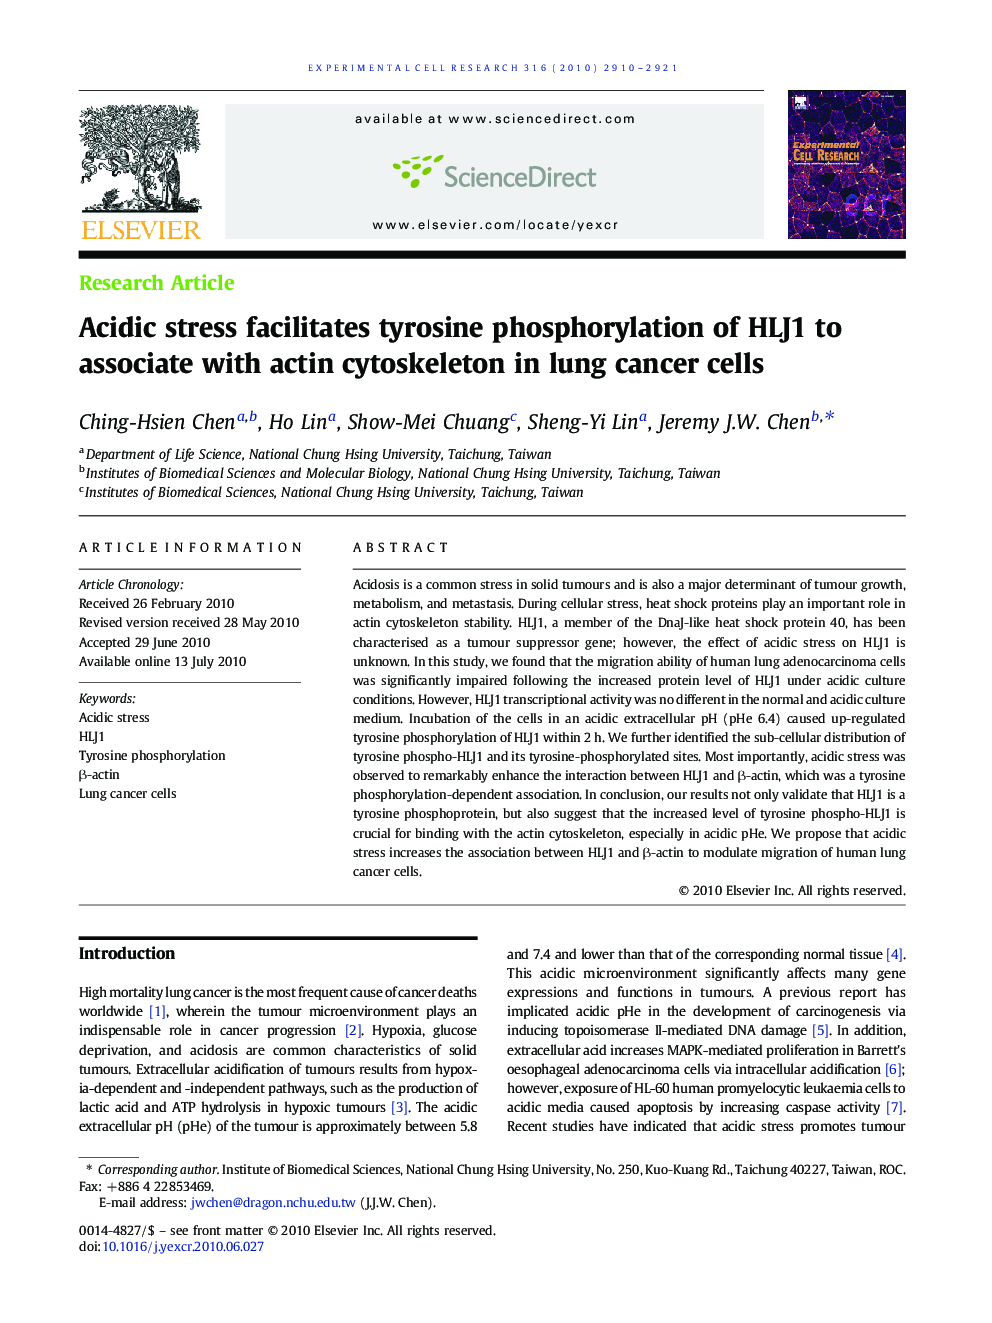 Acidic stress facilitates tyrosine phosphorylation of HLJ1 to associate with actin cytoskeleton in lung cancer cells